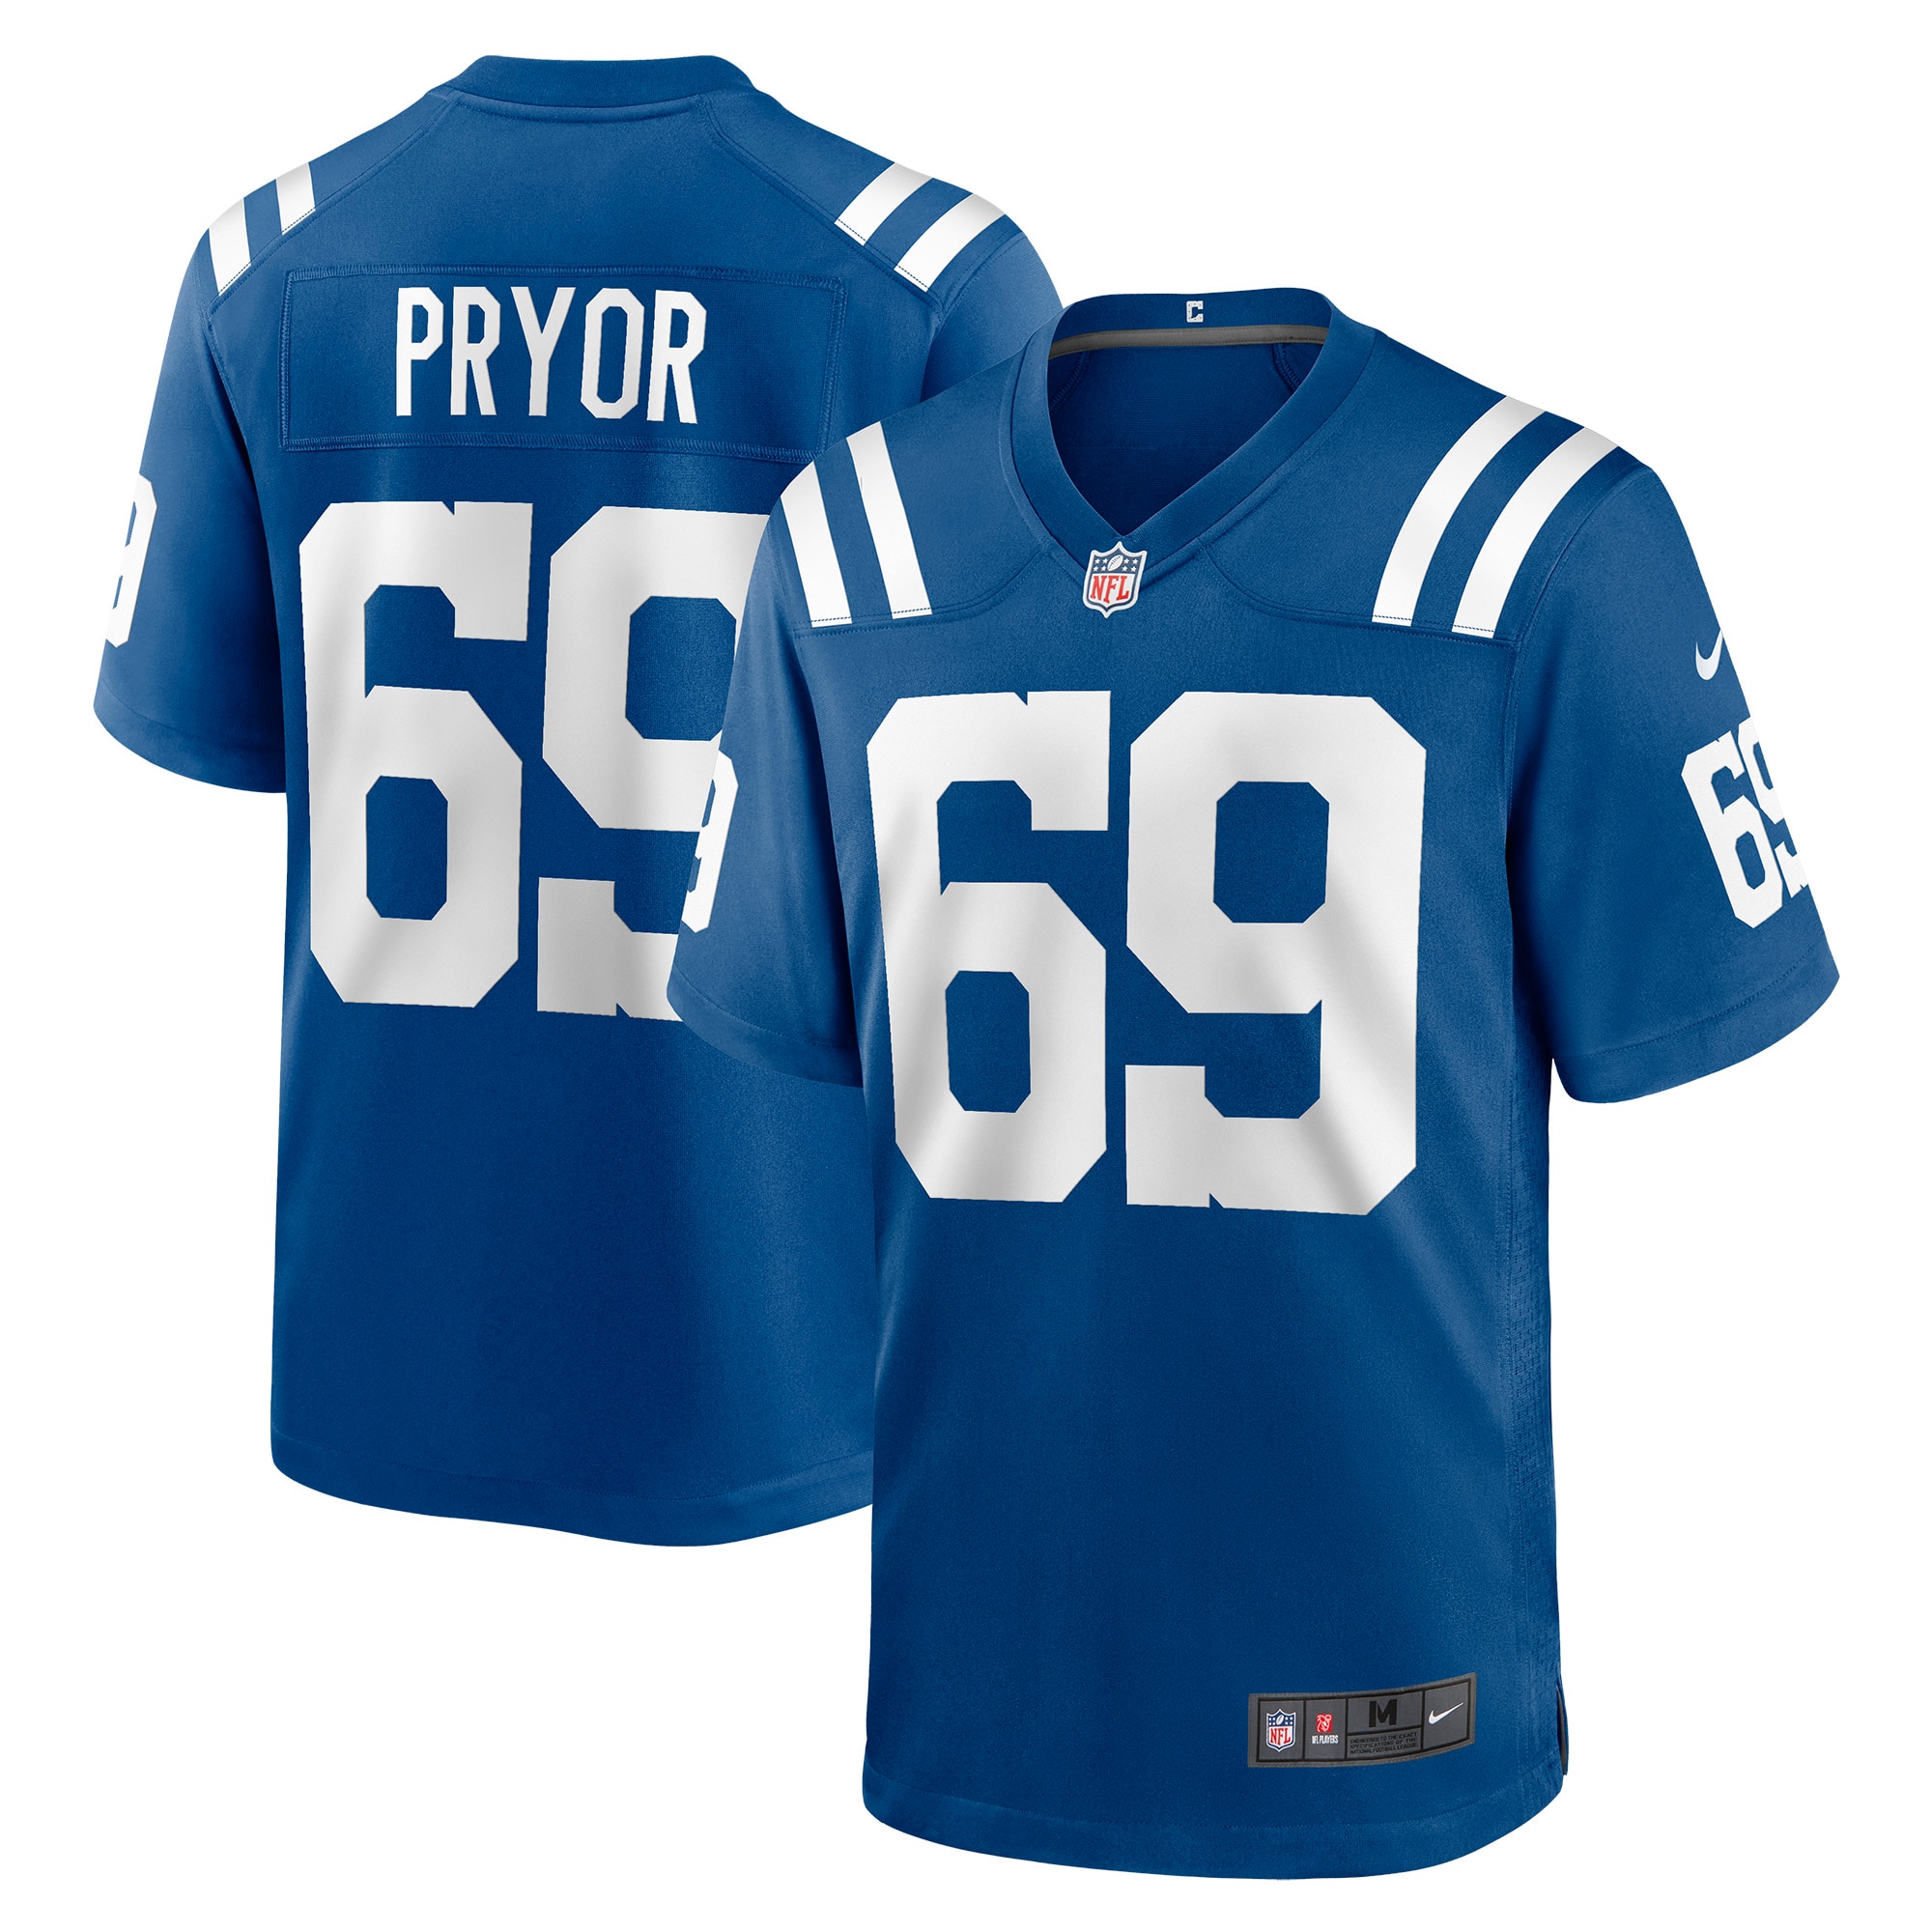 Men's Indianapolis Colts Jerseys Royal Matt Pryor Game Style